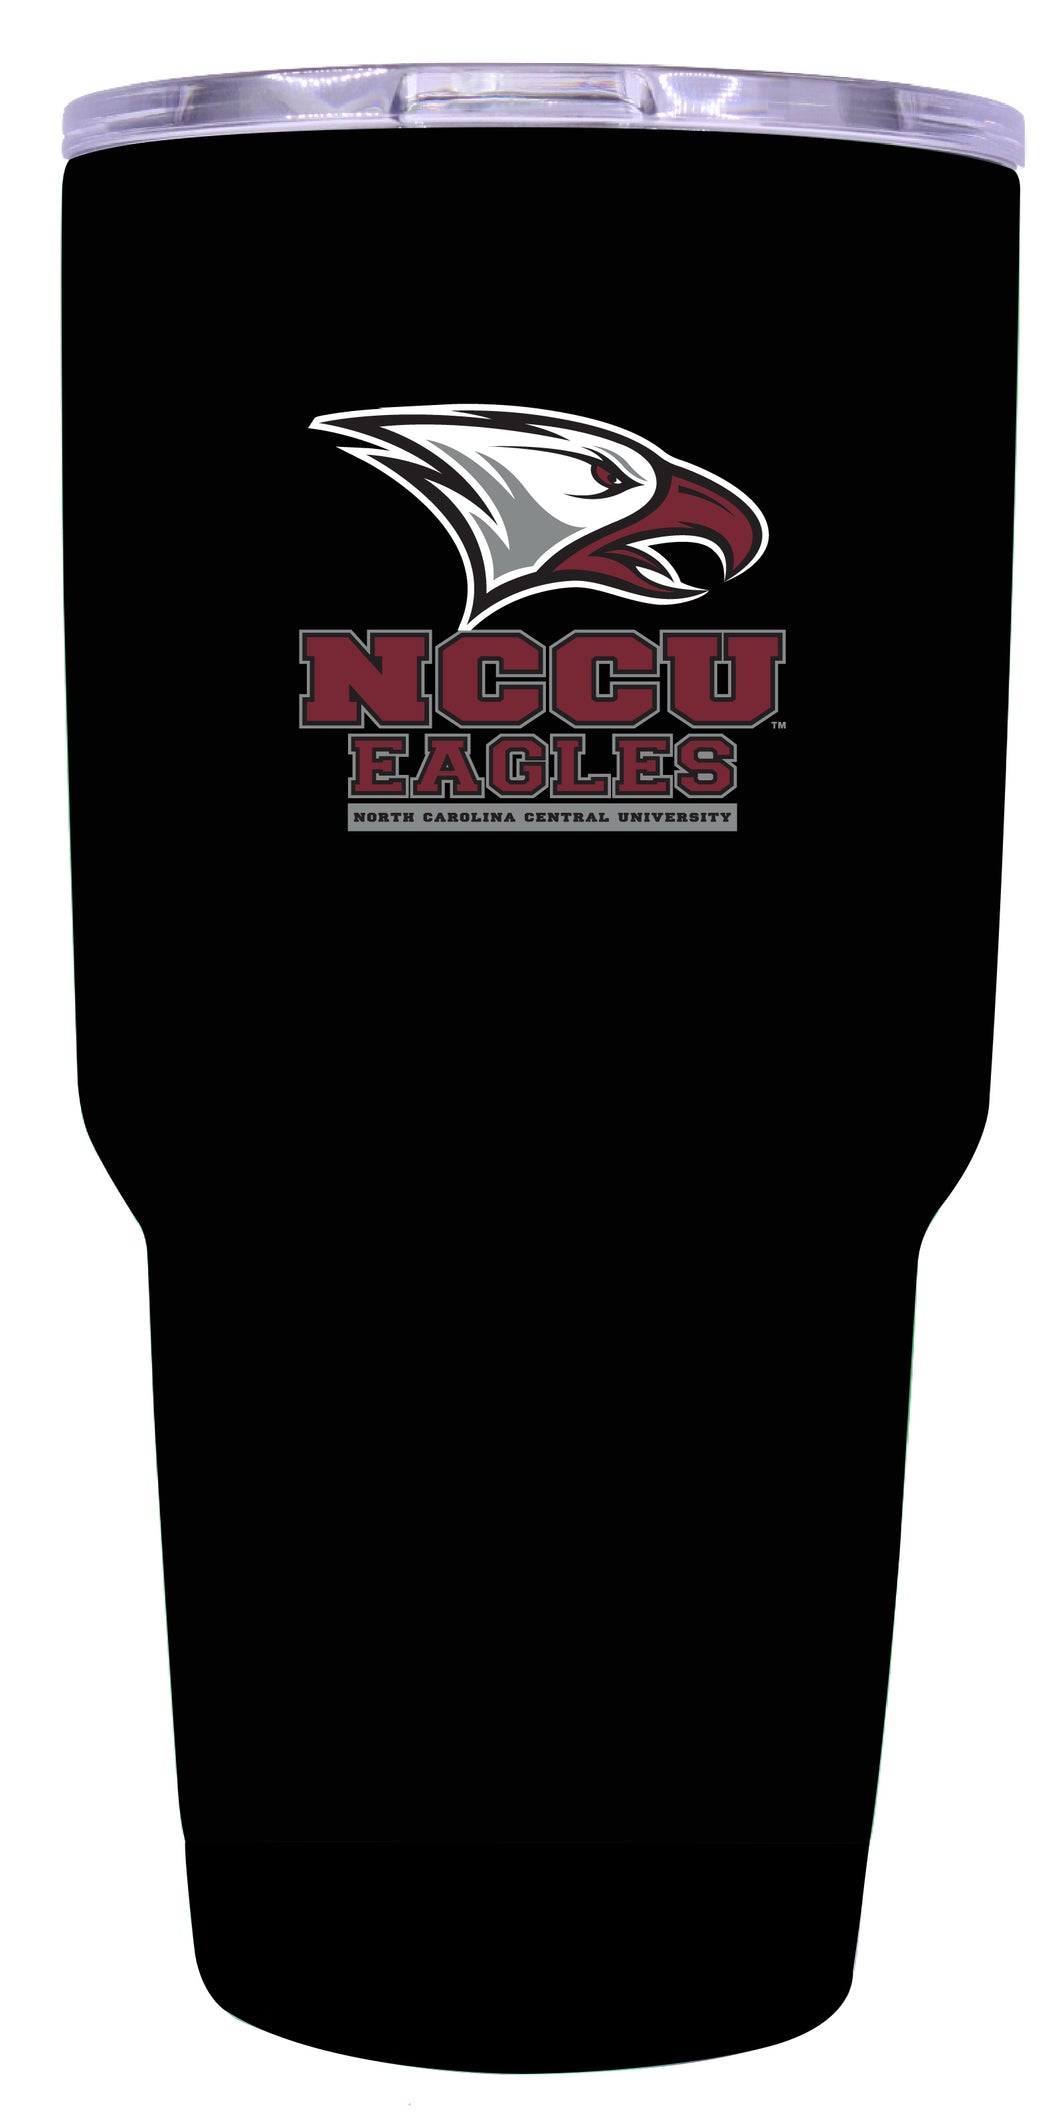 North Carolina Central Eagles Mascot Logo Tumbler - 24oz Color-Choice Insulated Stainless Steel Mug